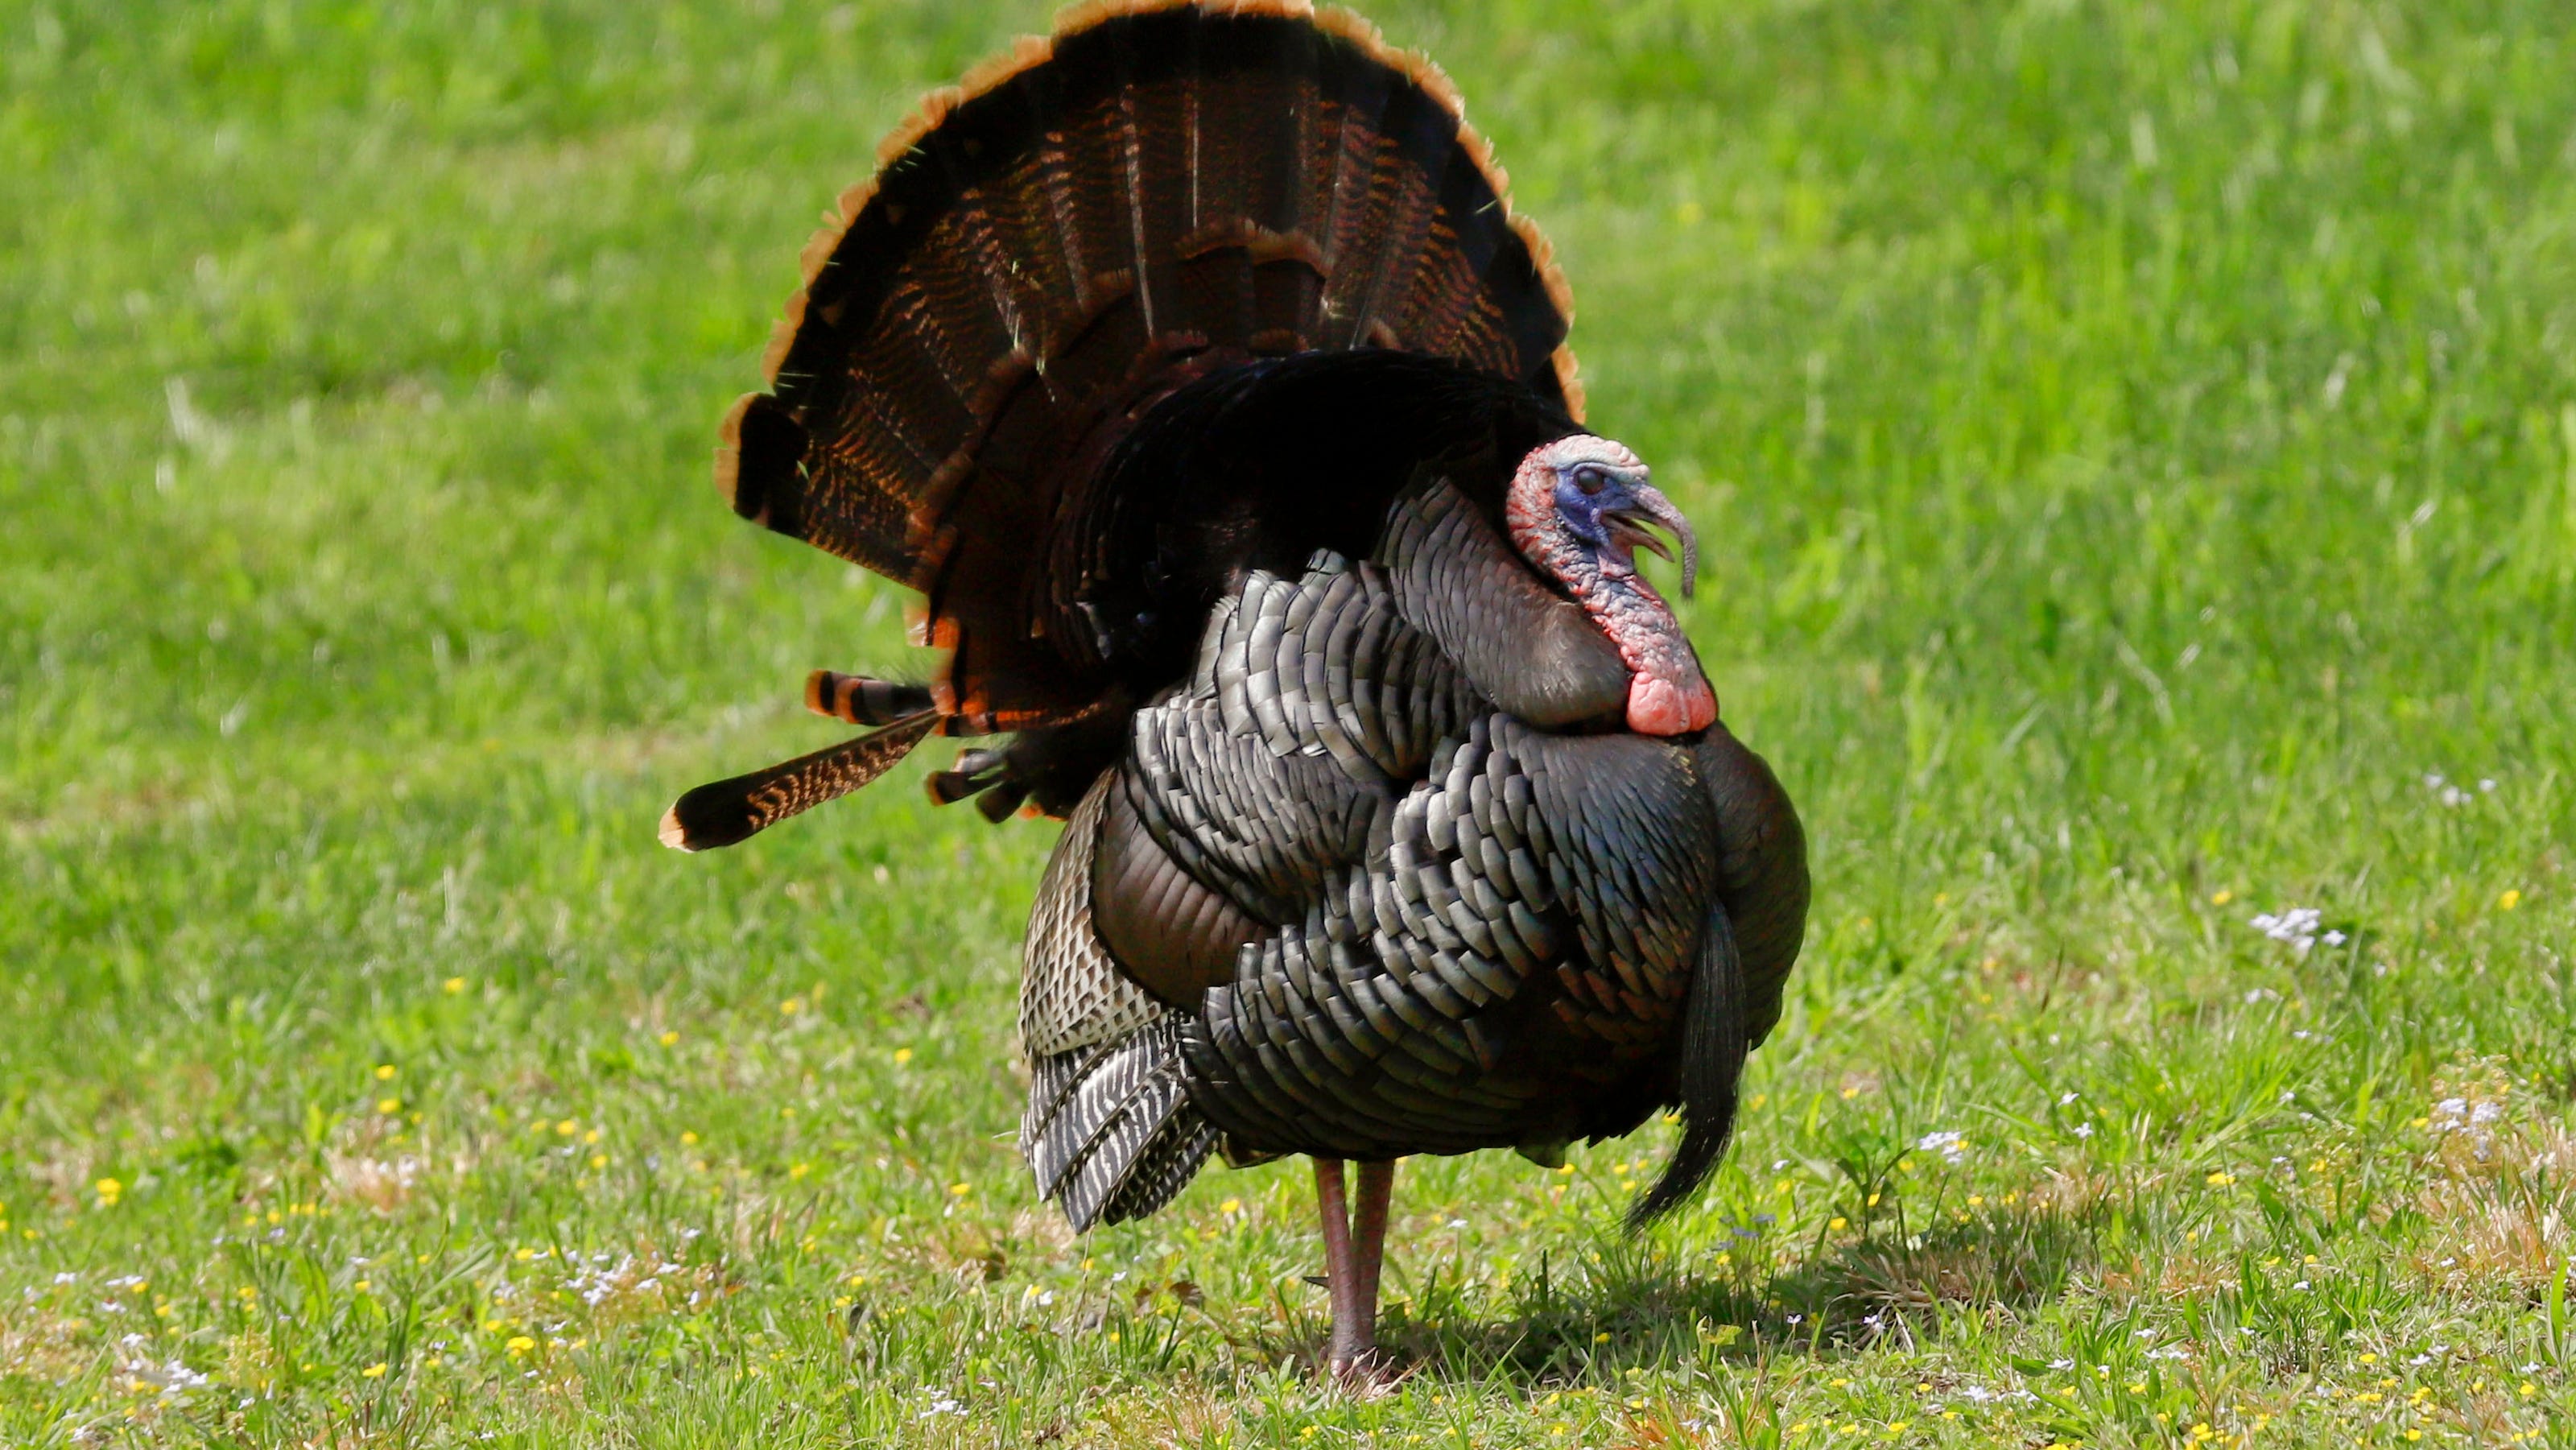 Outdoors First week of Ohio spring turkey hunting season